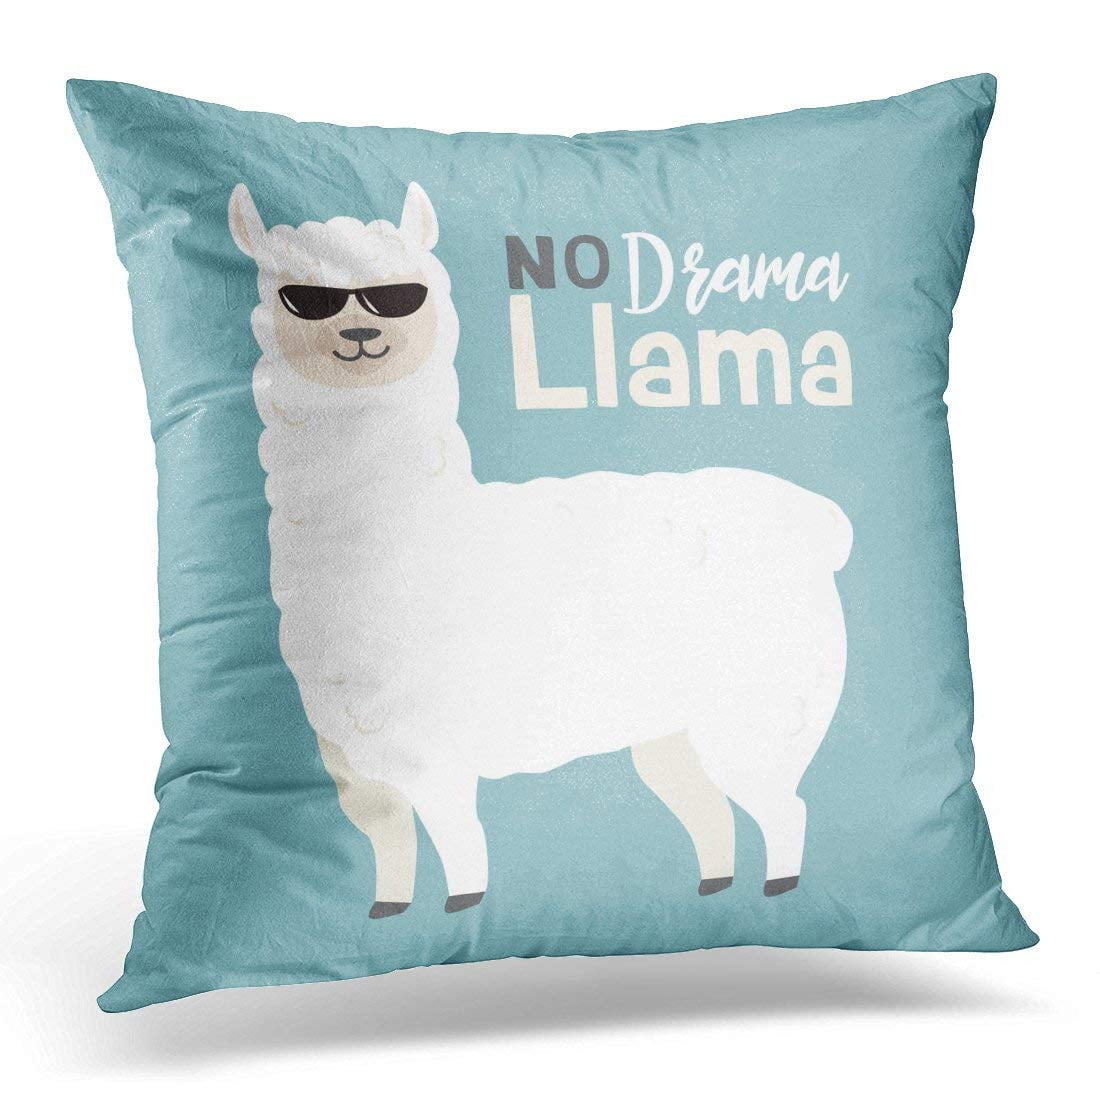 Moslion Llama Pillow Cover Decor Cute Cartoon Llama Design with No Prob Llama Motivational Quote Throw Pillow Case 18 x 18 Inch Cotton Linen Cushion Cover for Men Women Pink White 